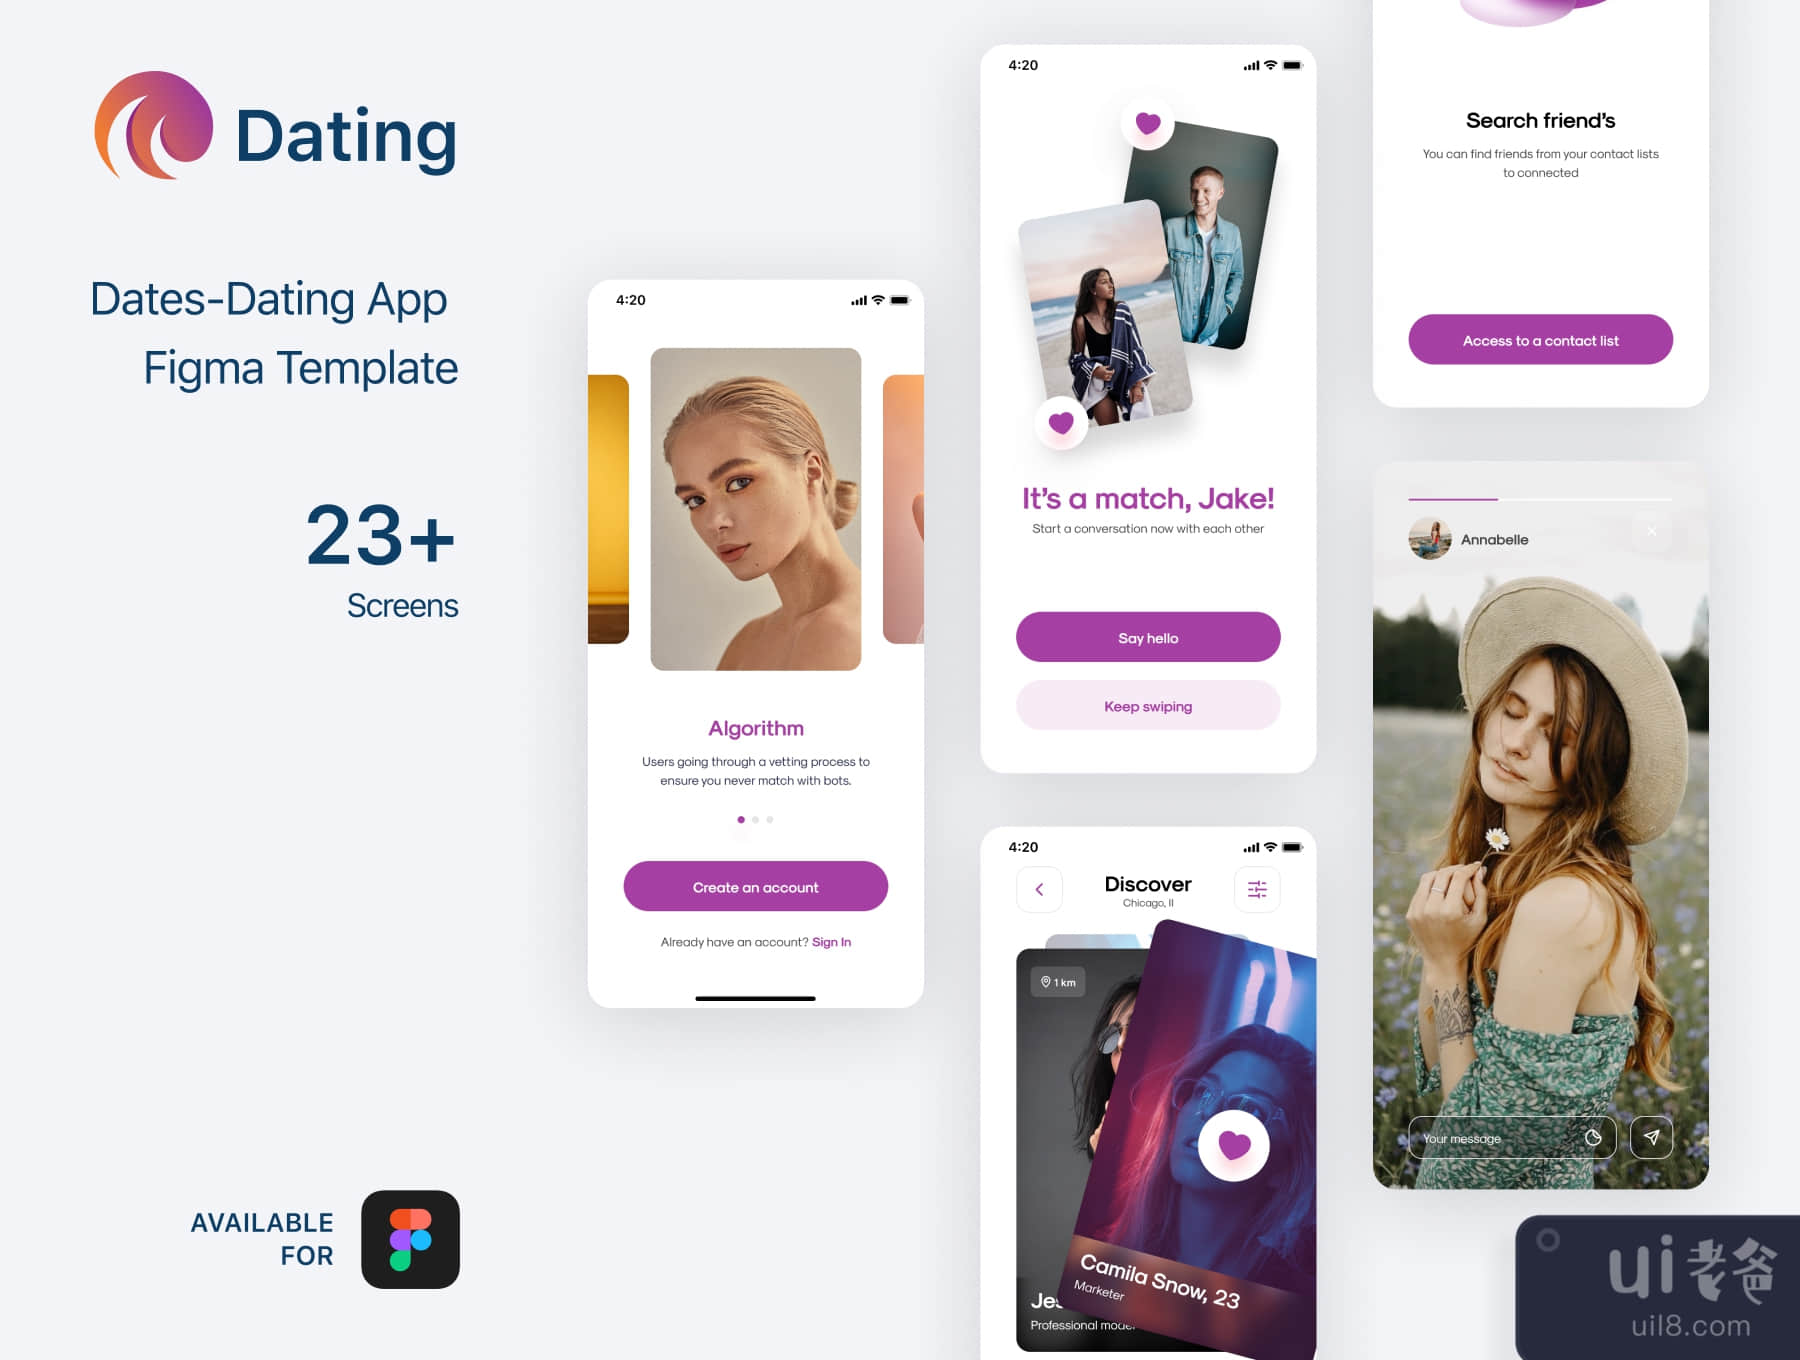 Meets约会应用程序模板 (Meets Dating App Template)插图1